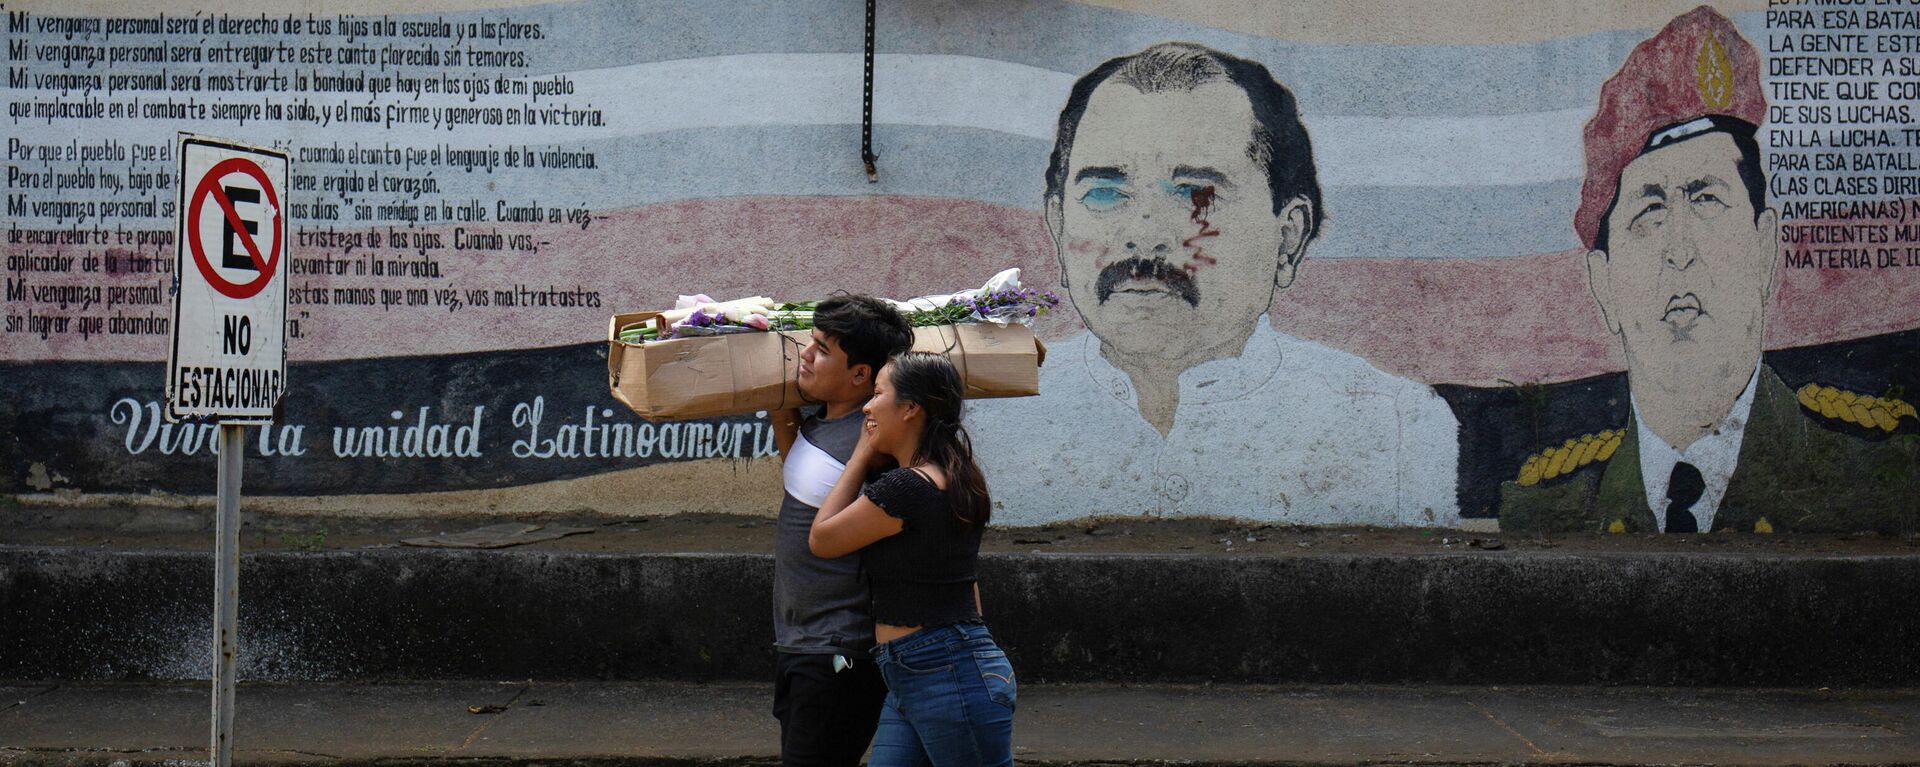 Personas caminando frente a un mural en Managua, Nicaragua - Sputnik Mundo, 1920, 26.01.2022